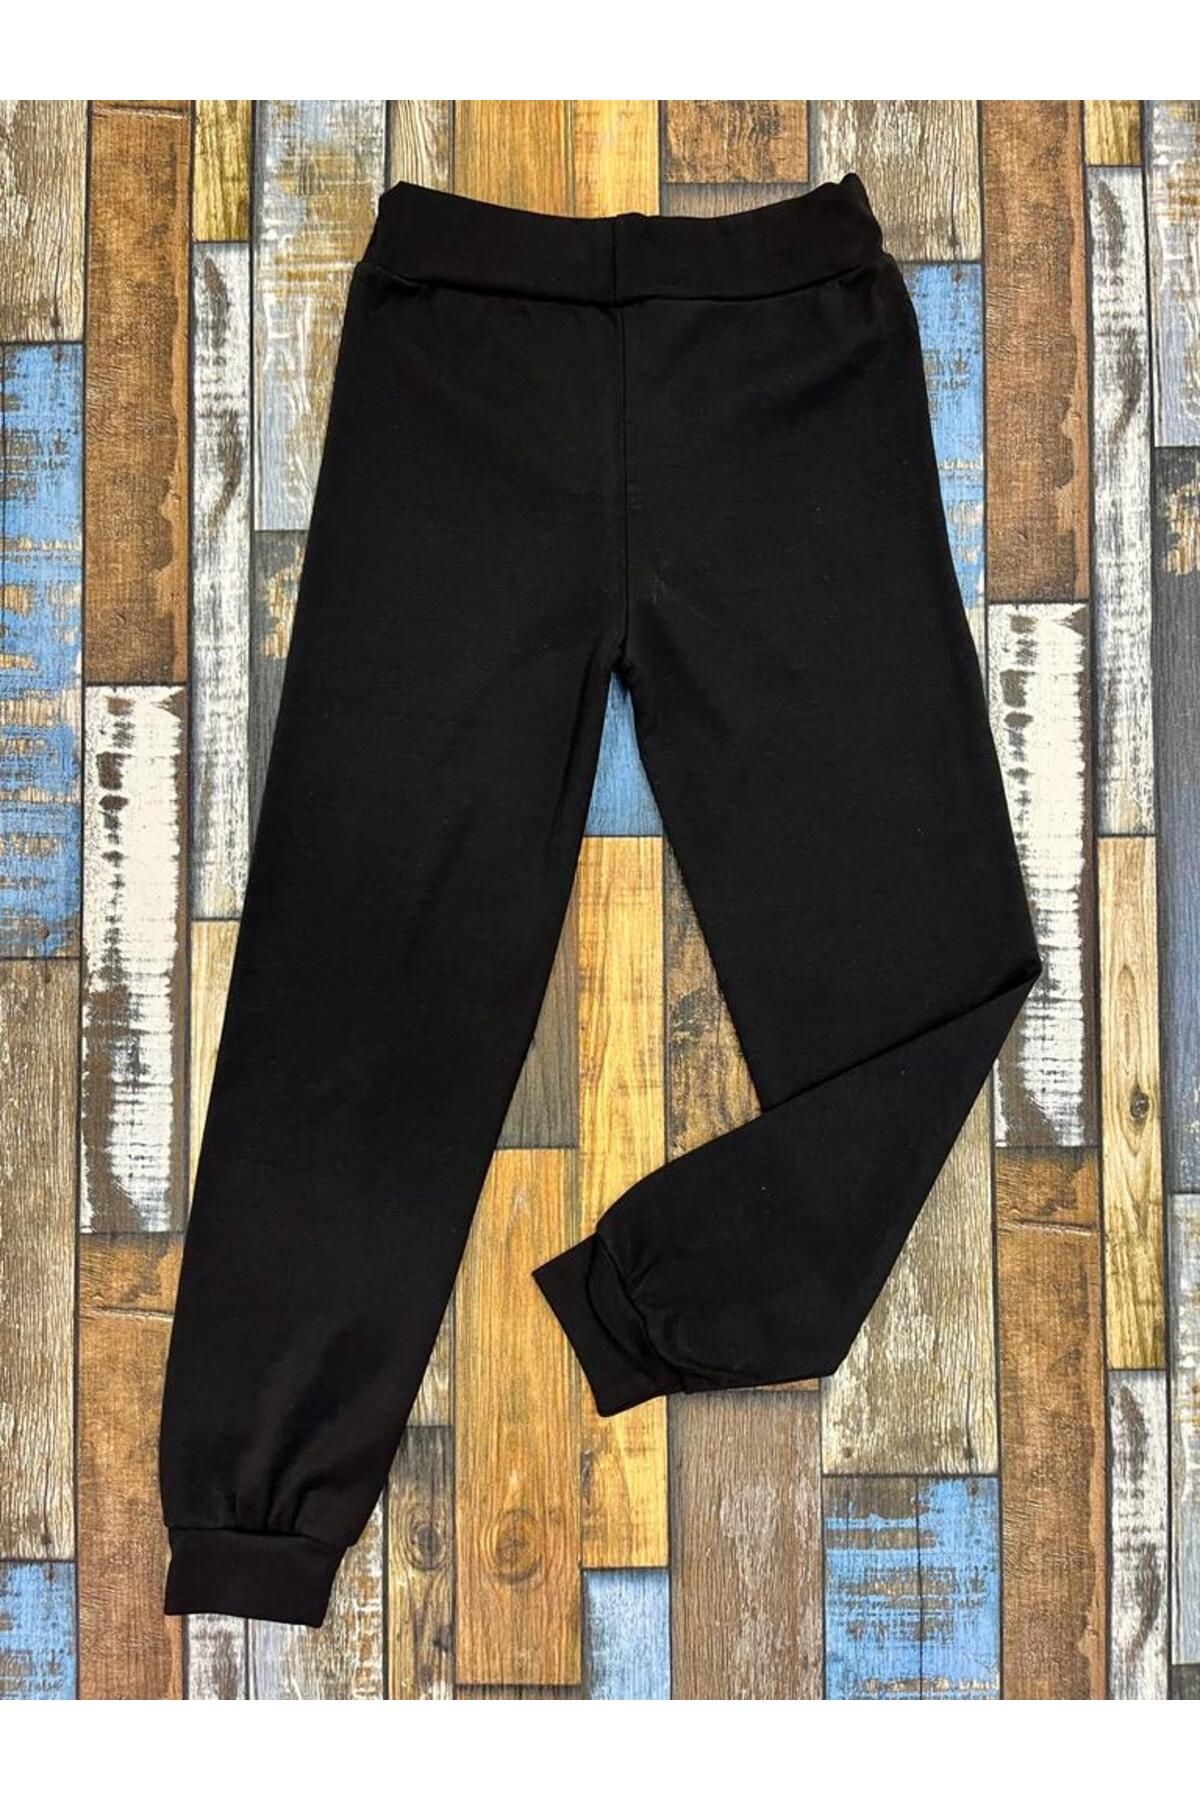 Esterella plain black sweatpants/lycra combed cotton two thread